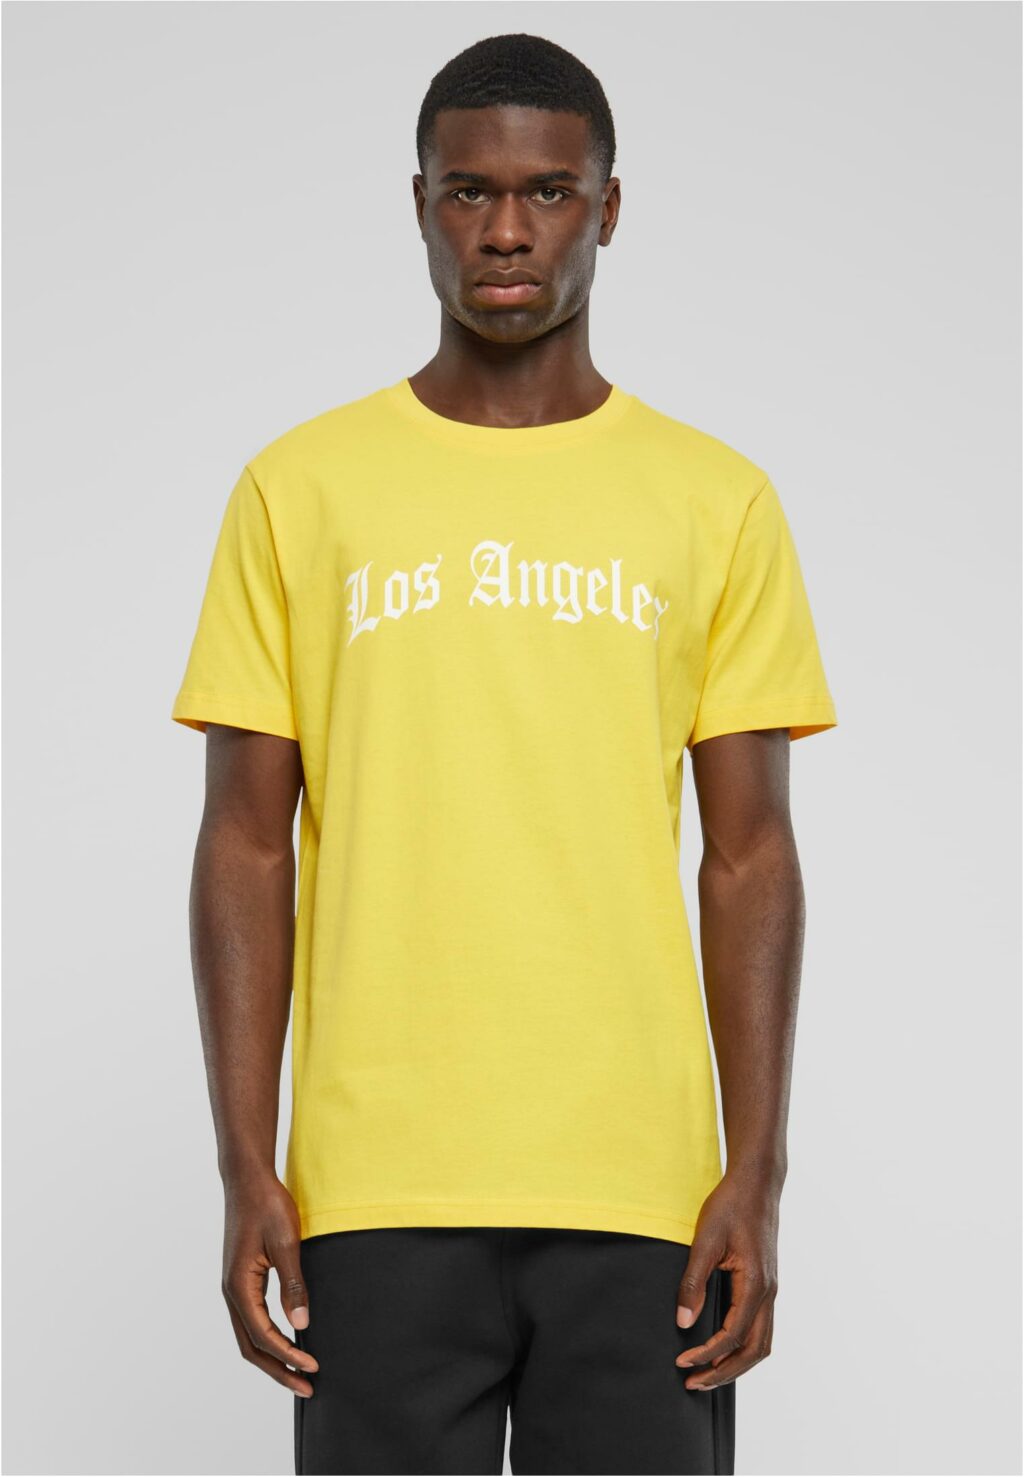 Los Angeles Wording Tee taxi yellow MT1578